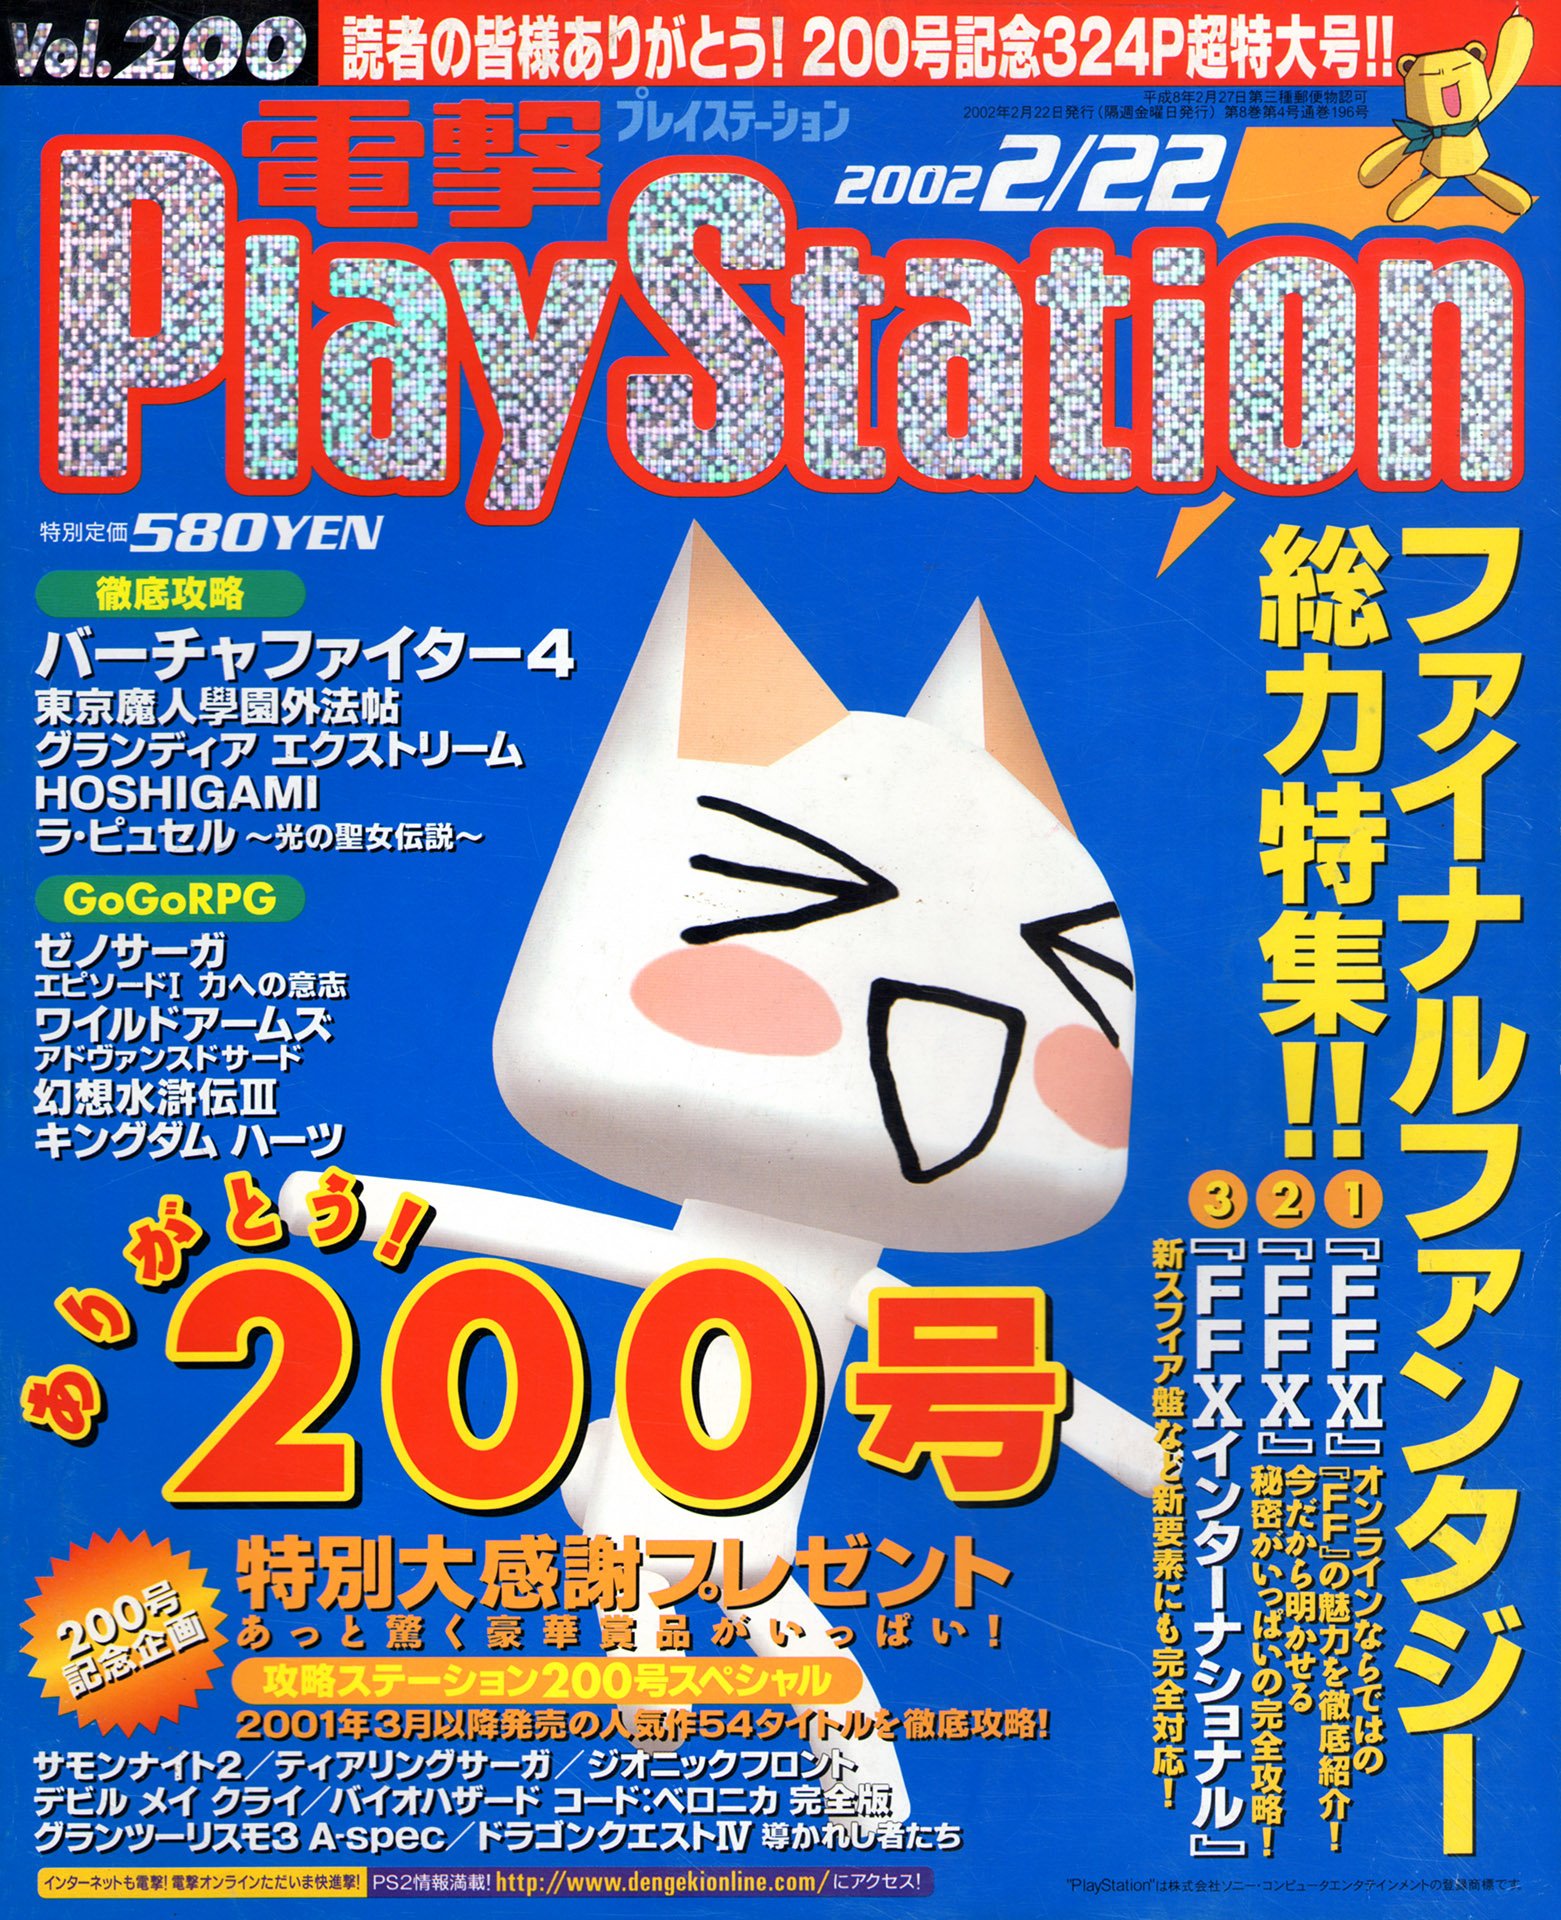 Dengeki Playstation 0 February 22 02 Dengeki Playstation Retromags Community